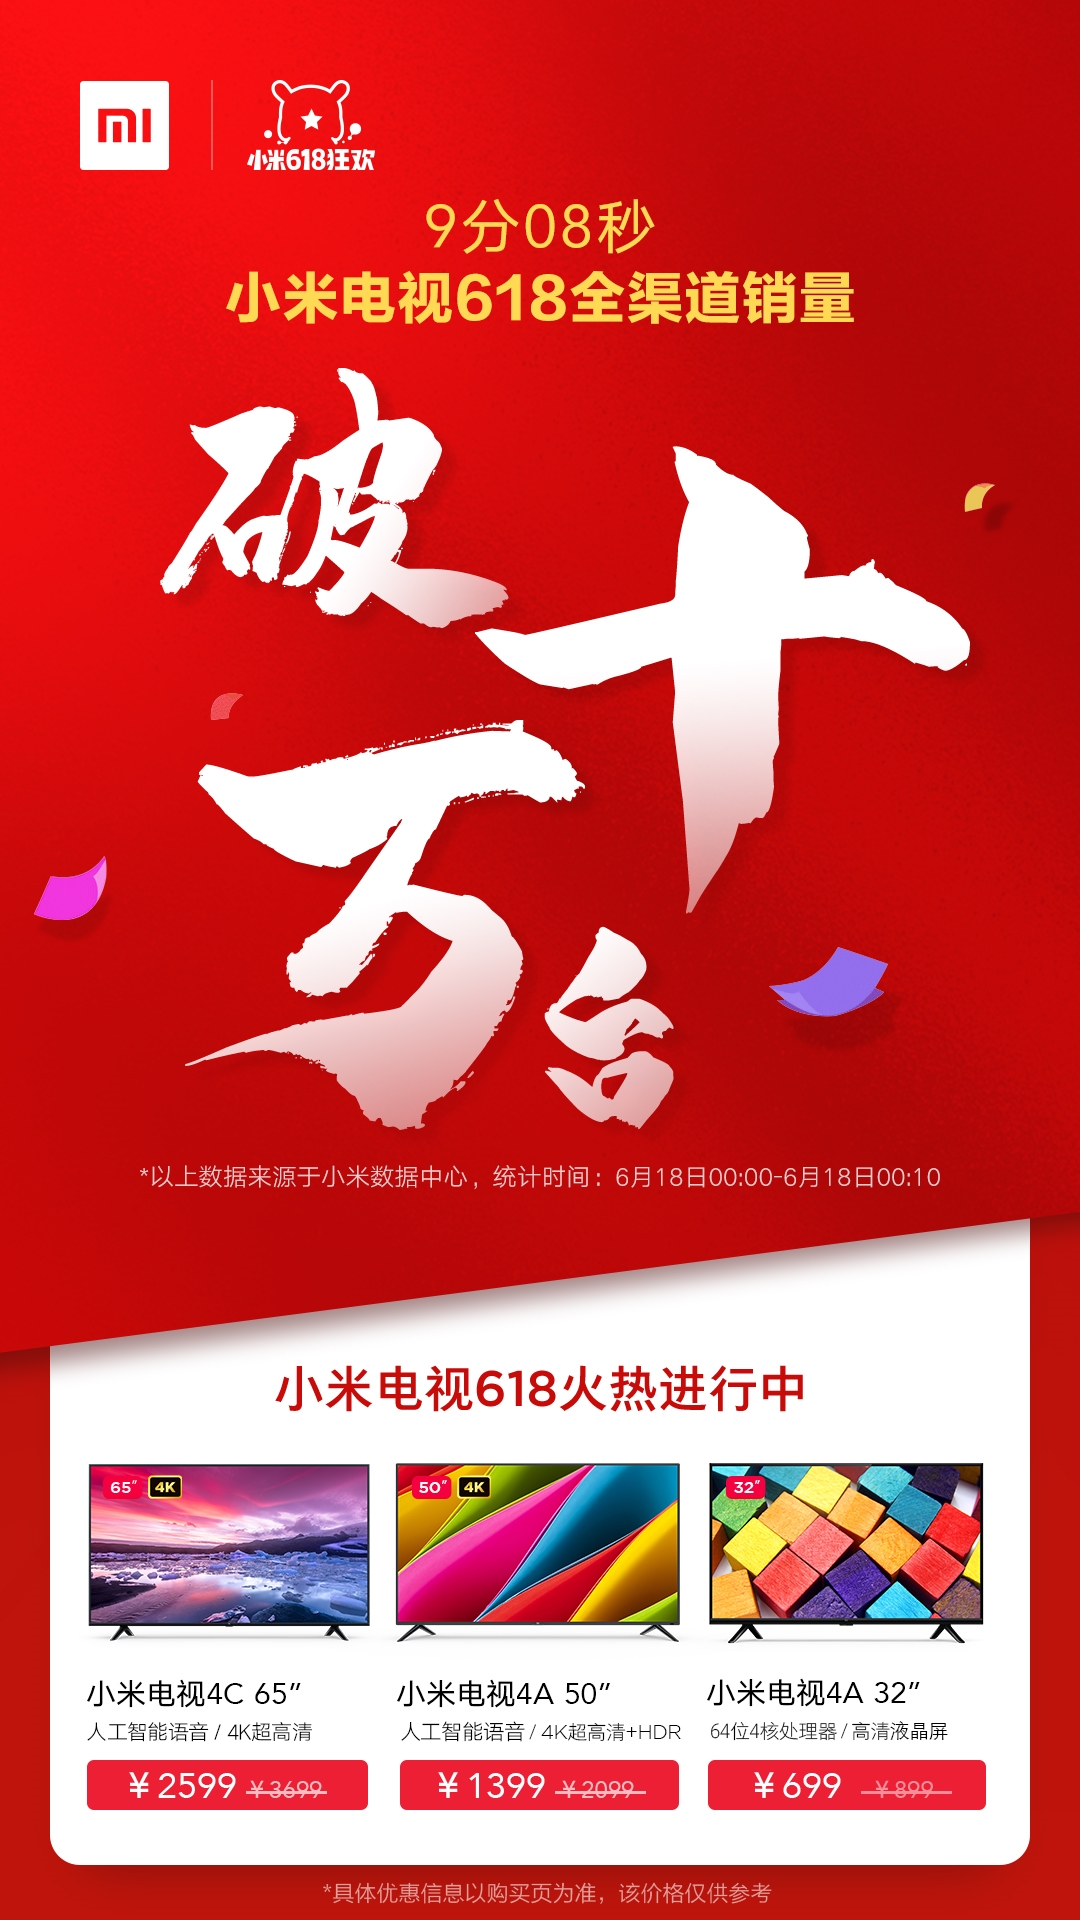 Xiaomi TV 618 Sales